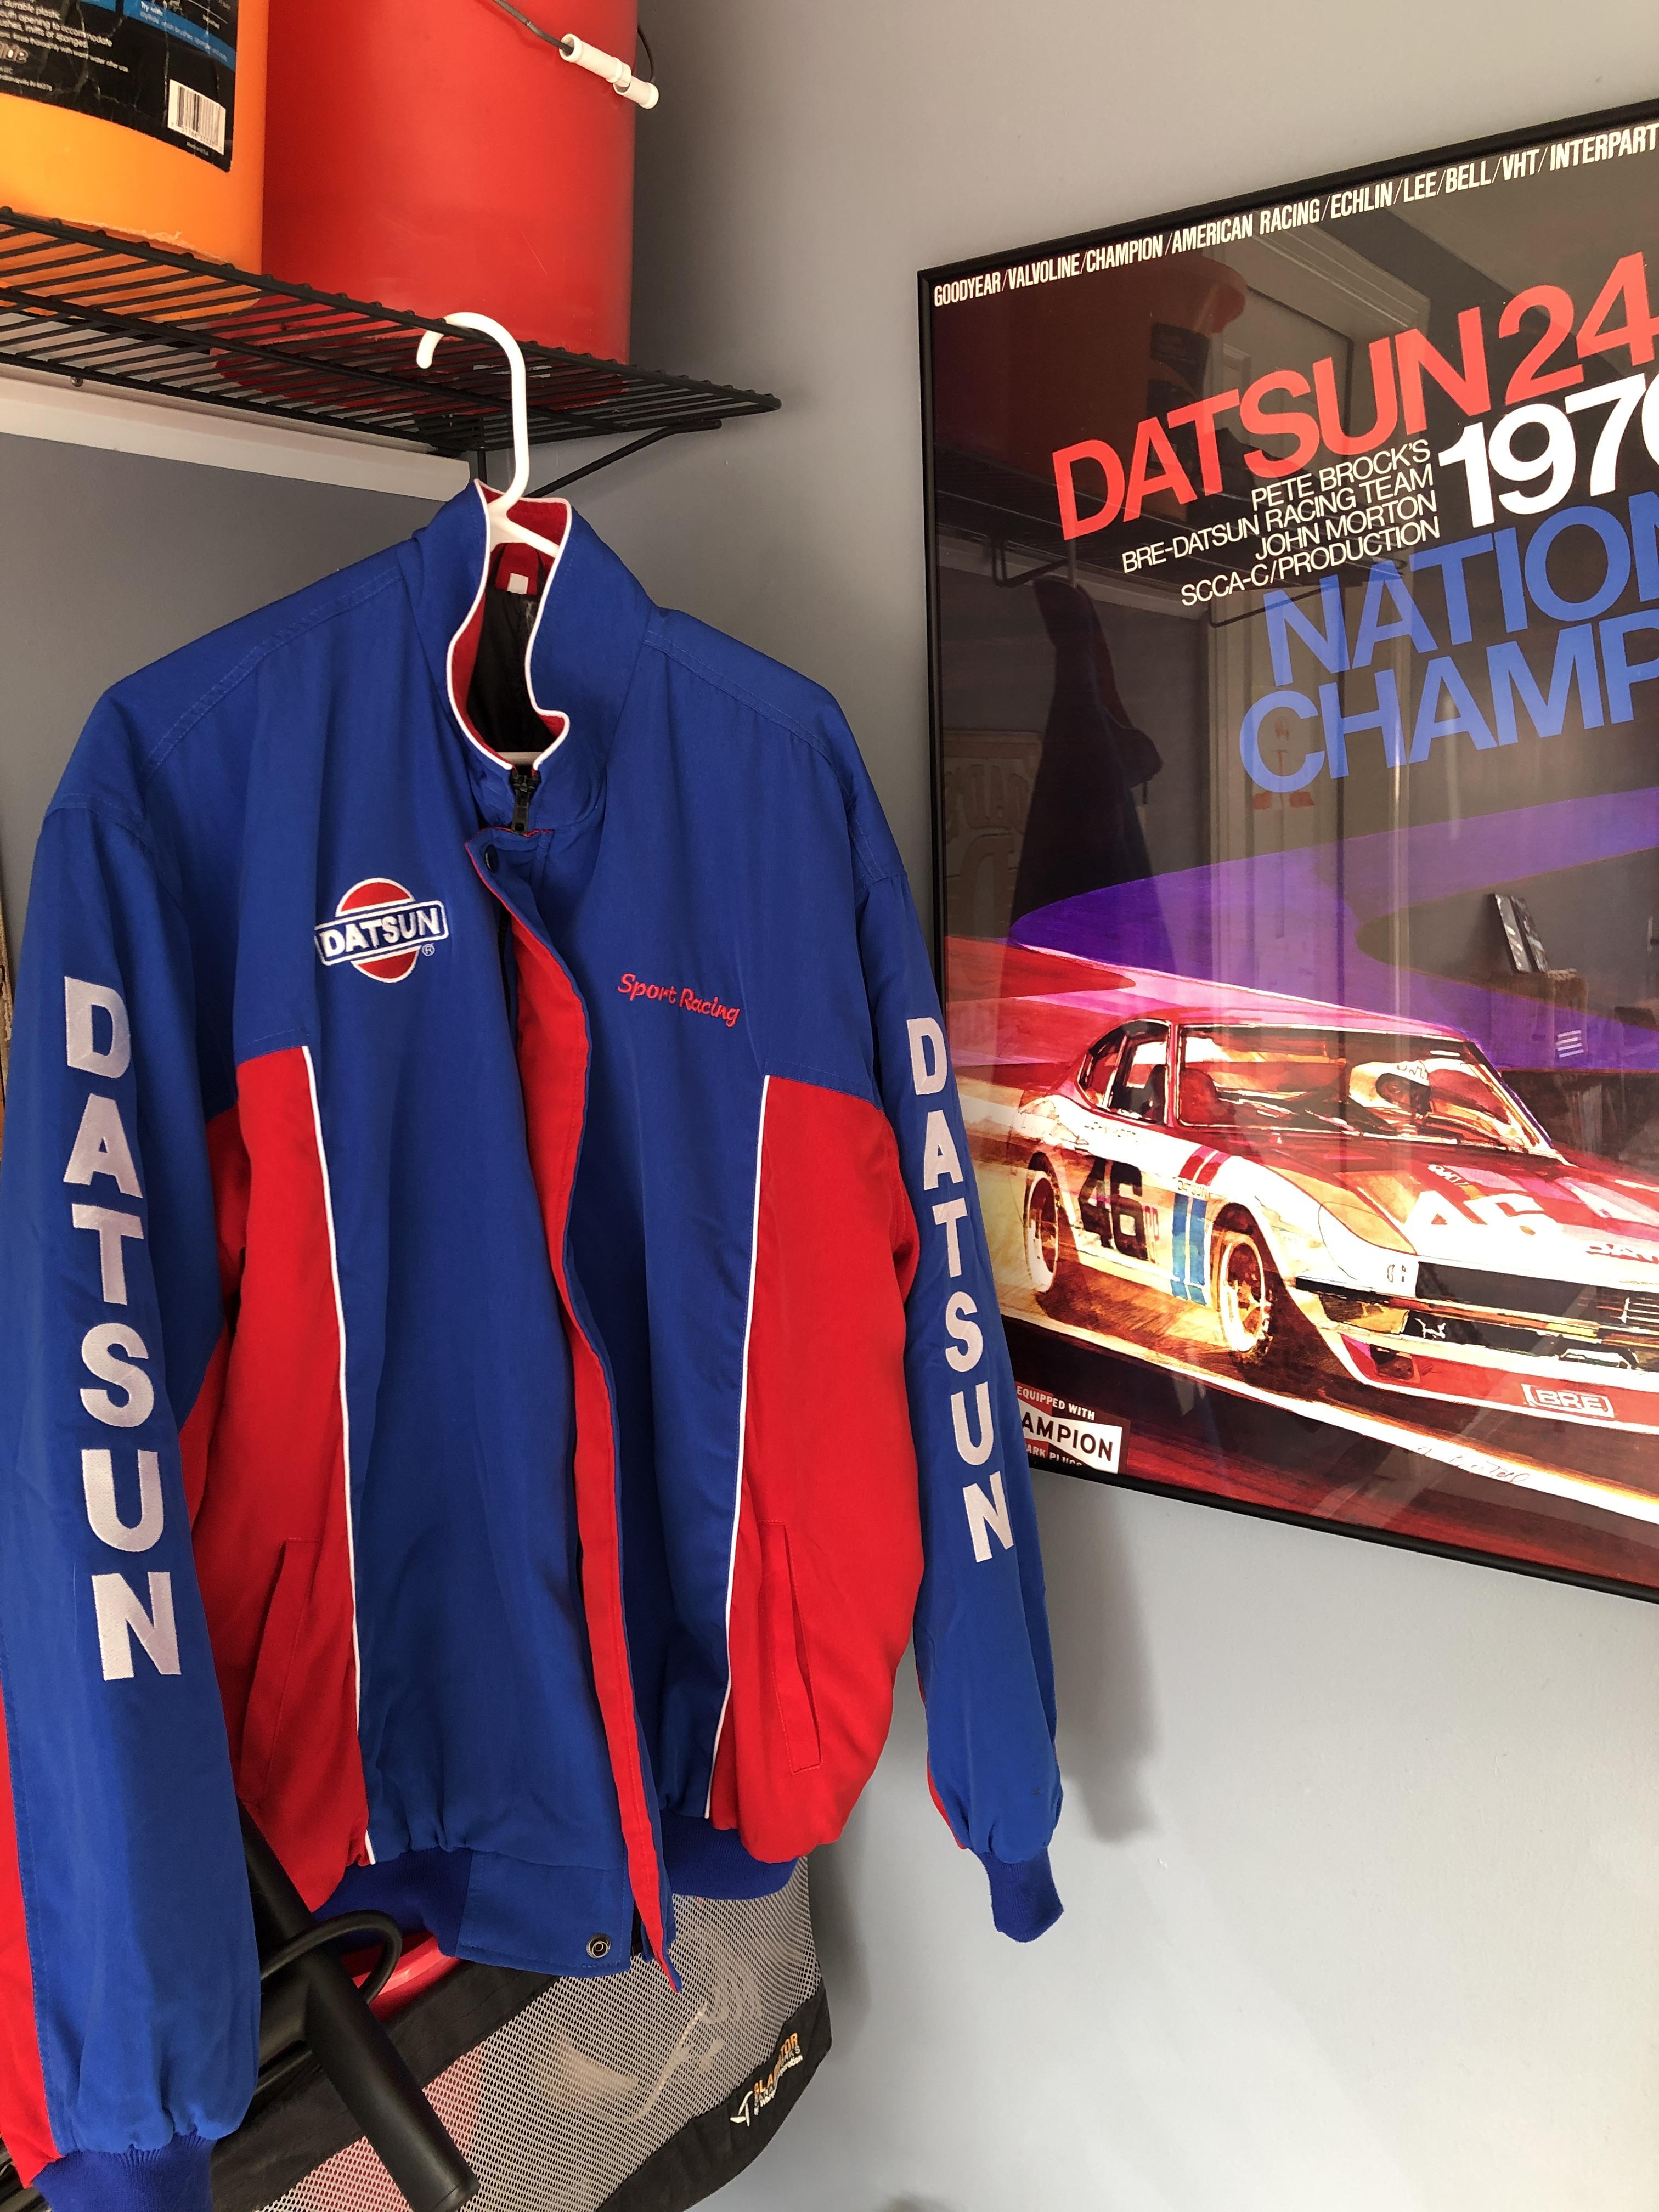 SOLD] Datsun racing jacket XXXL - For Sale - The Classic Zcar Club